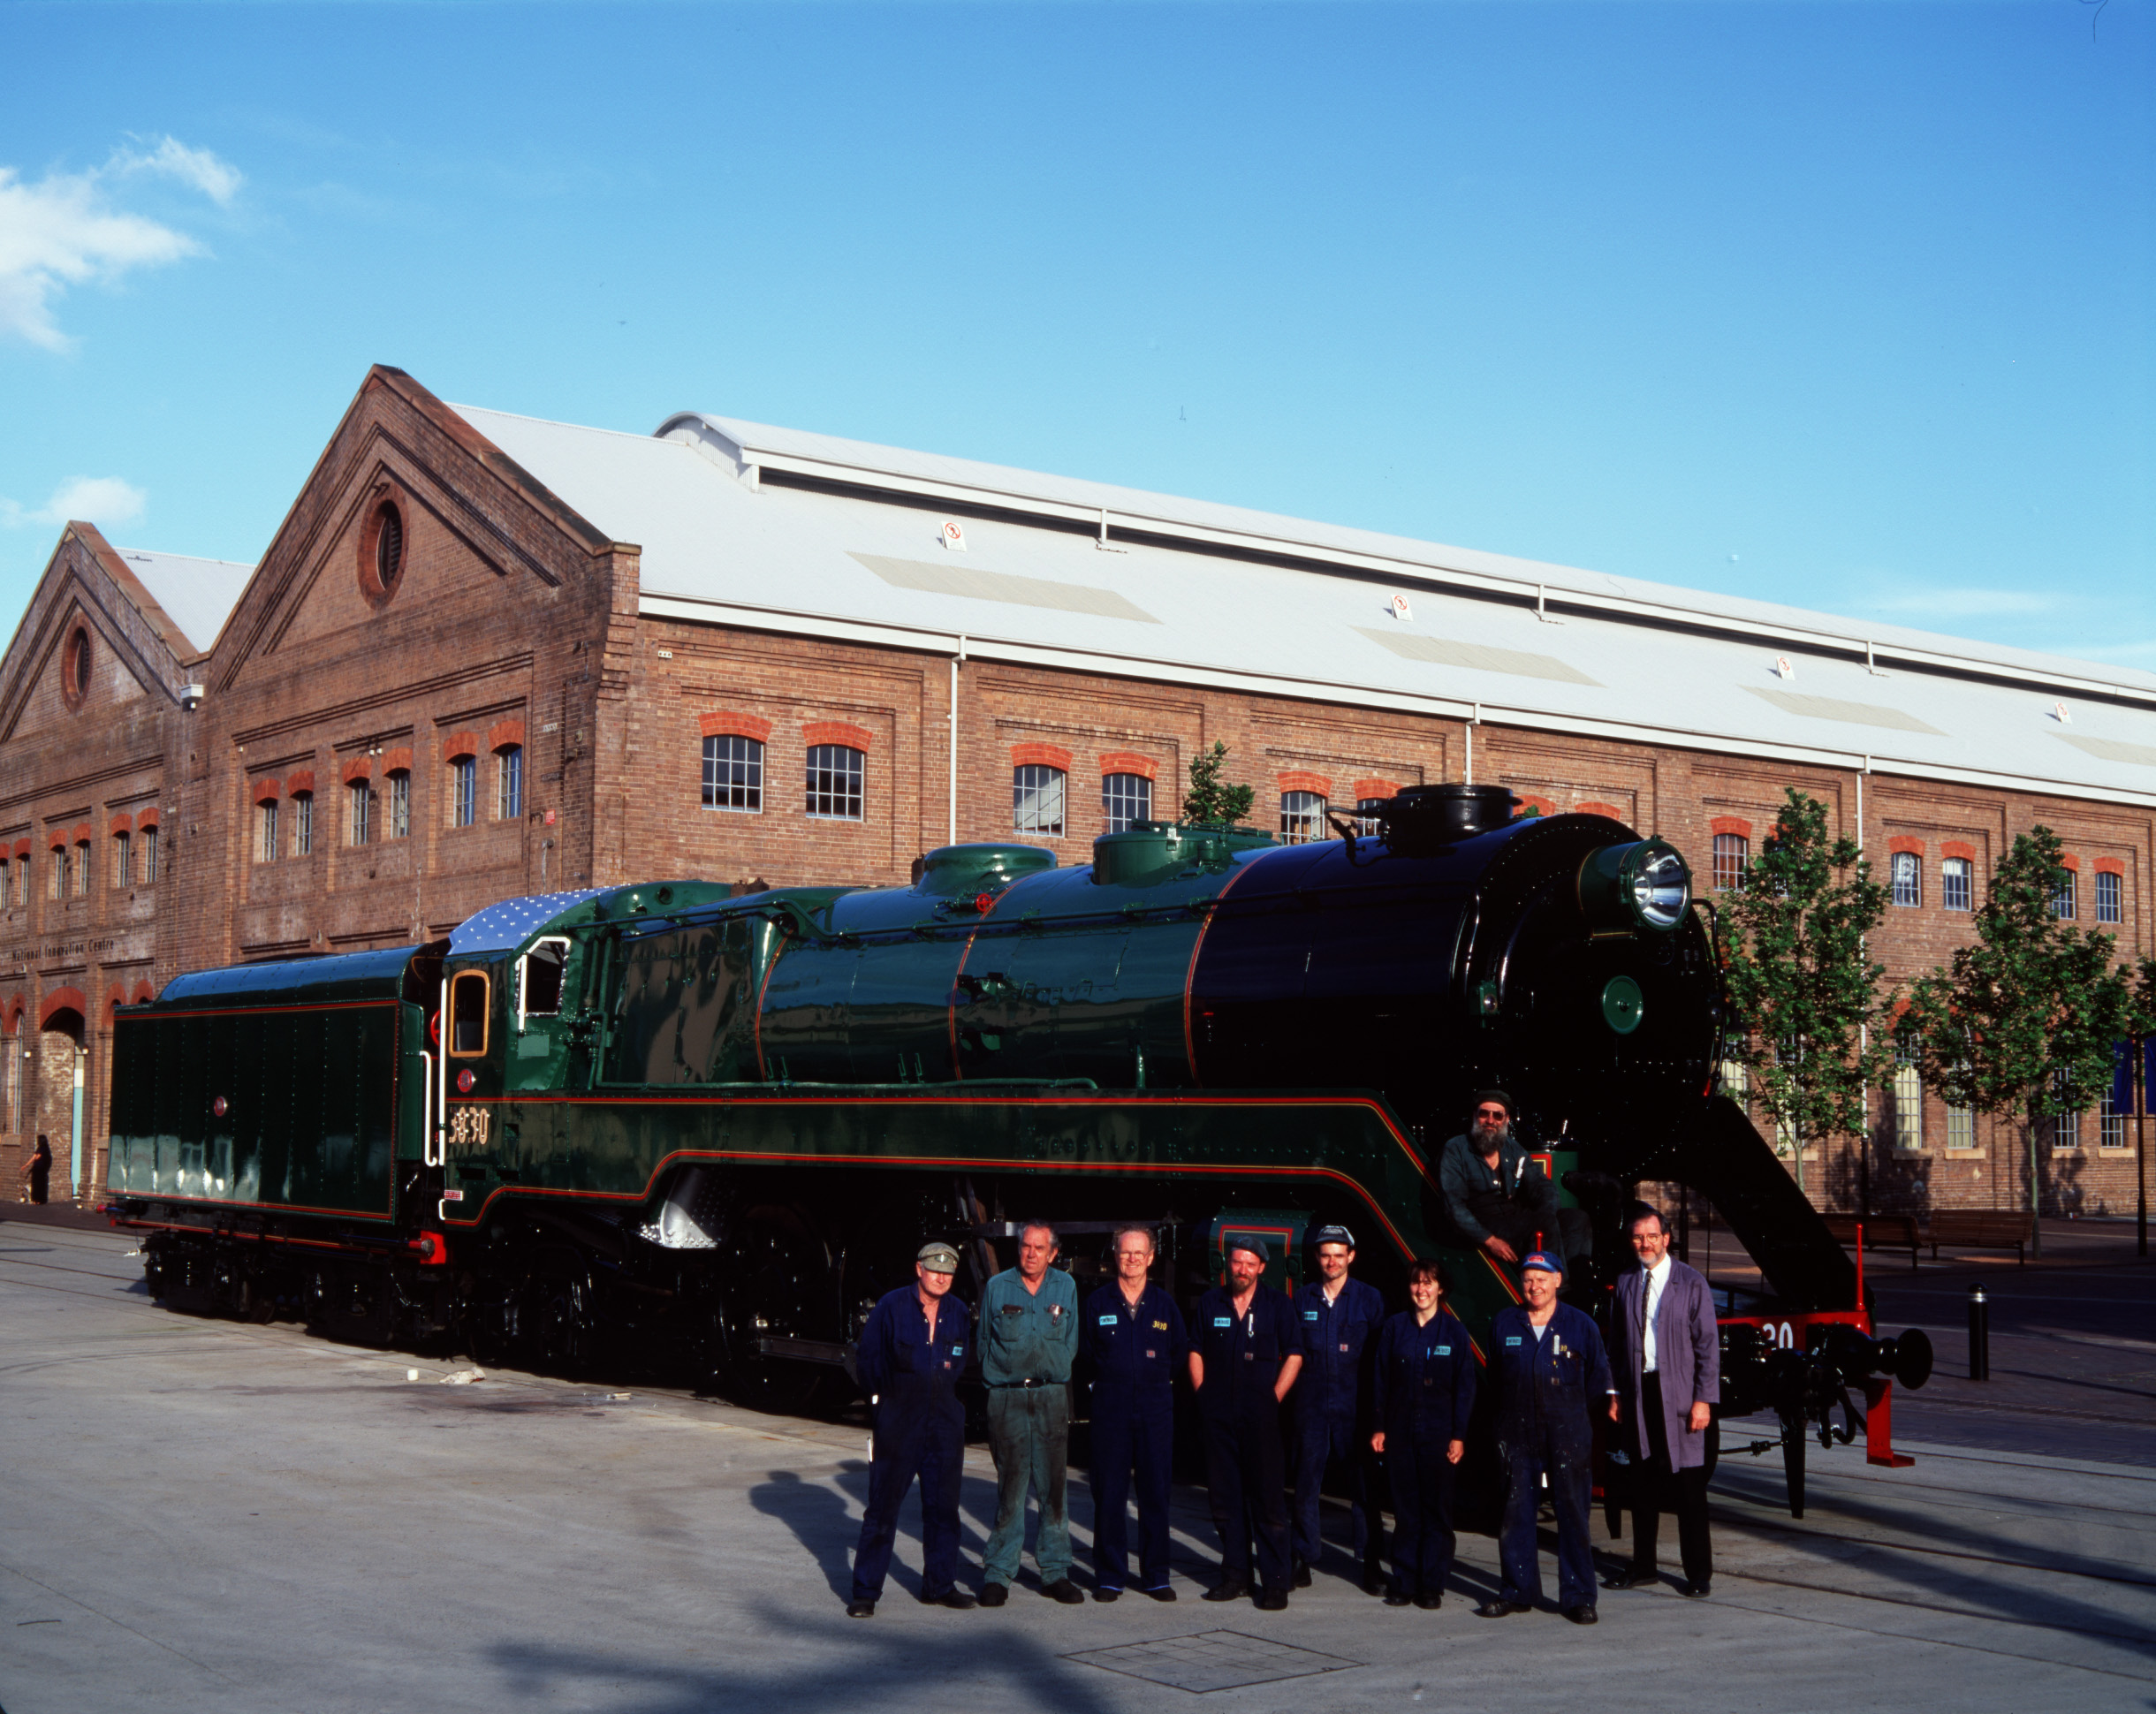 Steam locomotive No. 3830